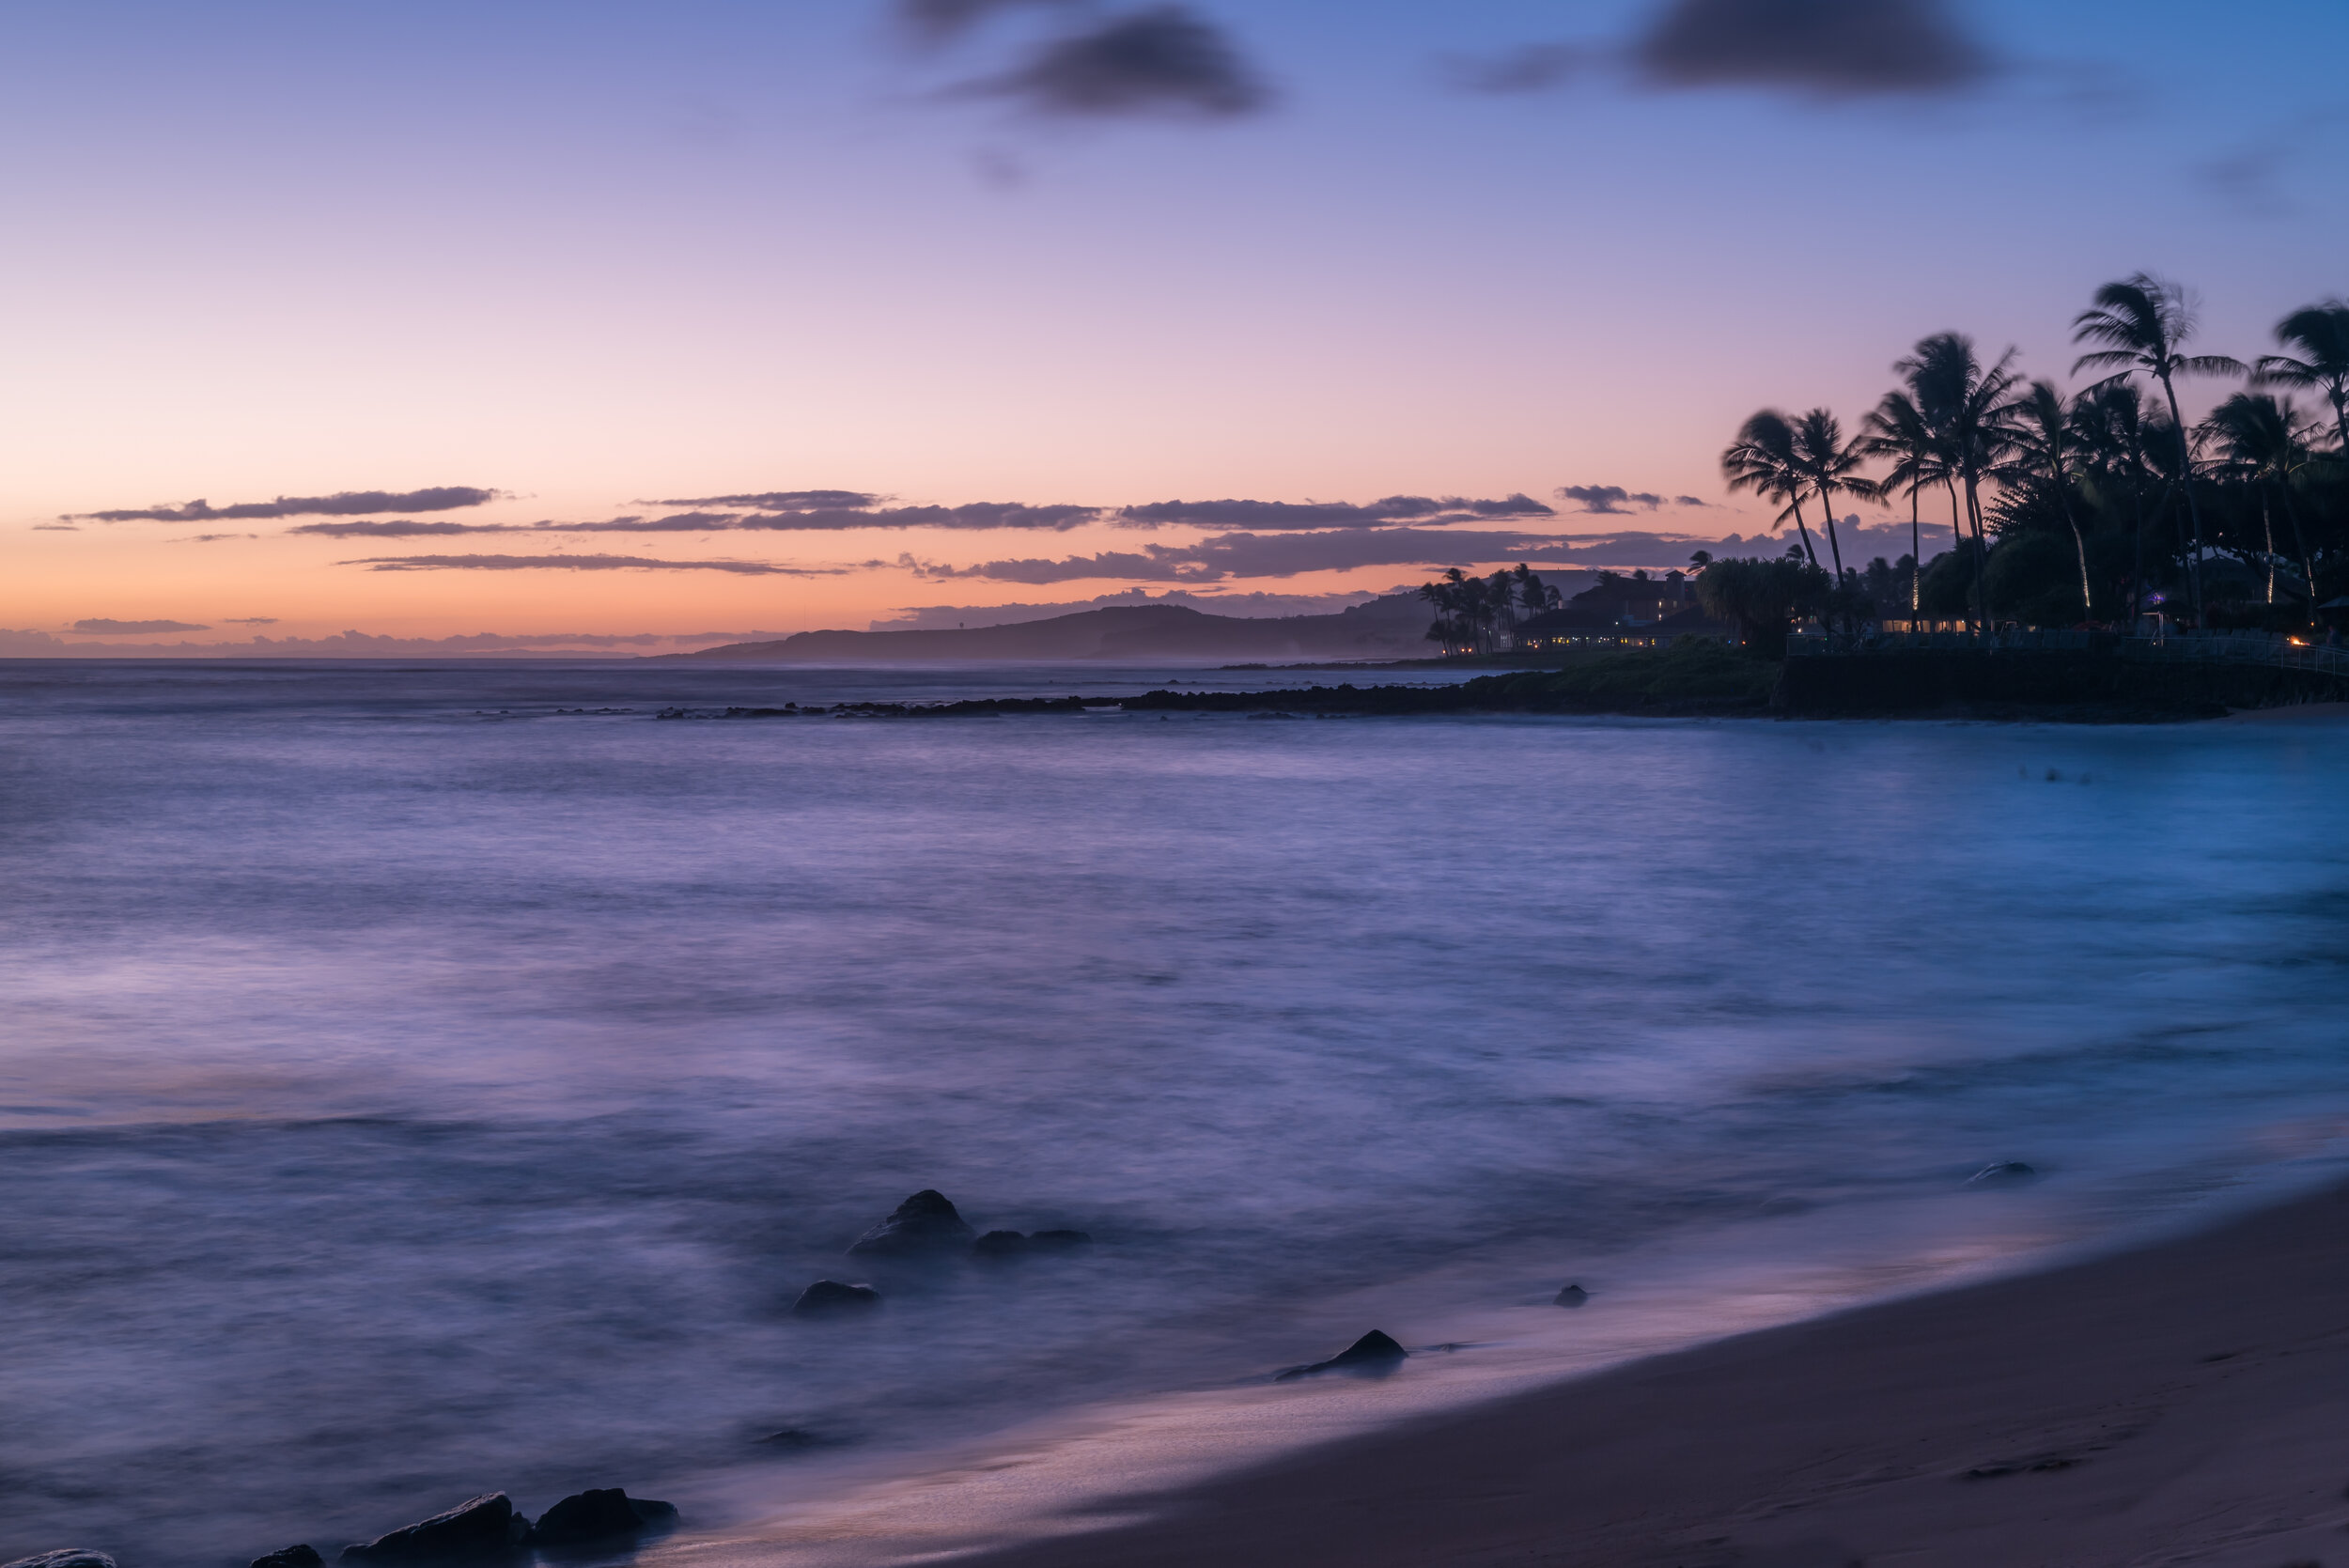 Choosing-a-hawaiian-island-kauai-piopu-beach